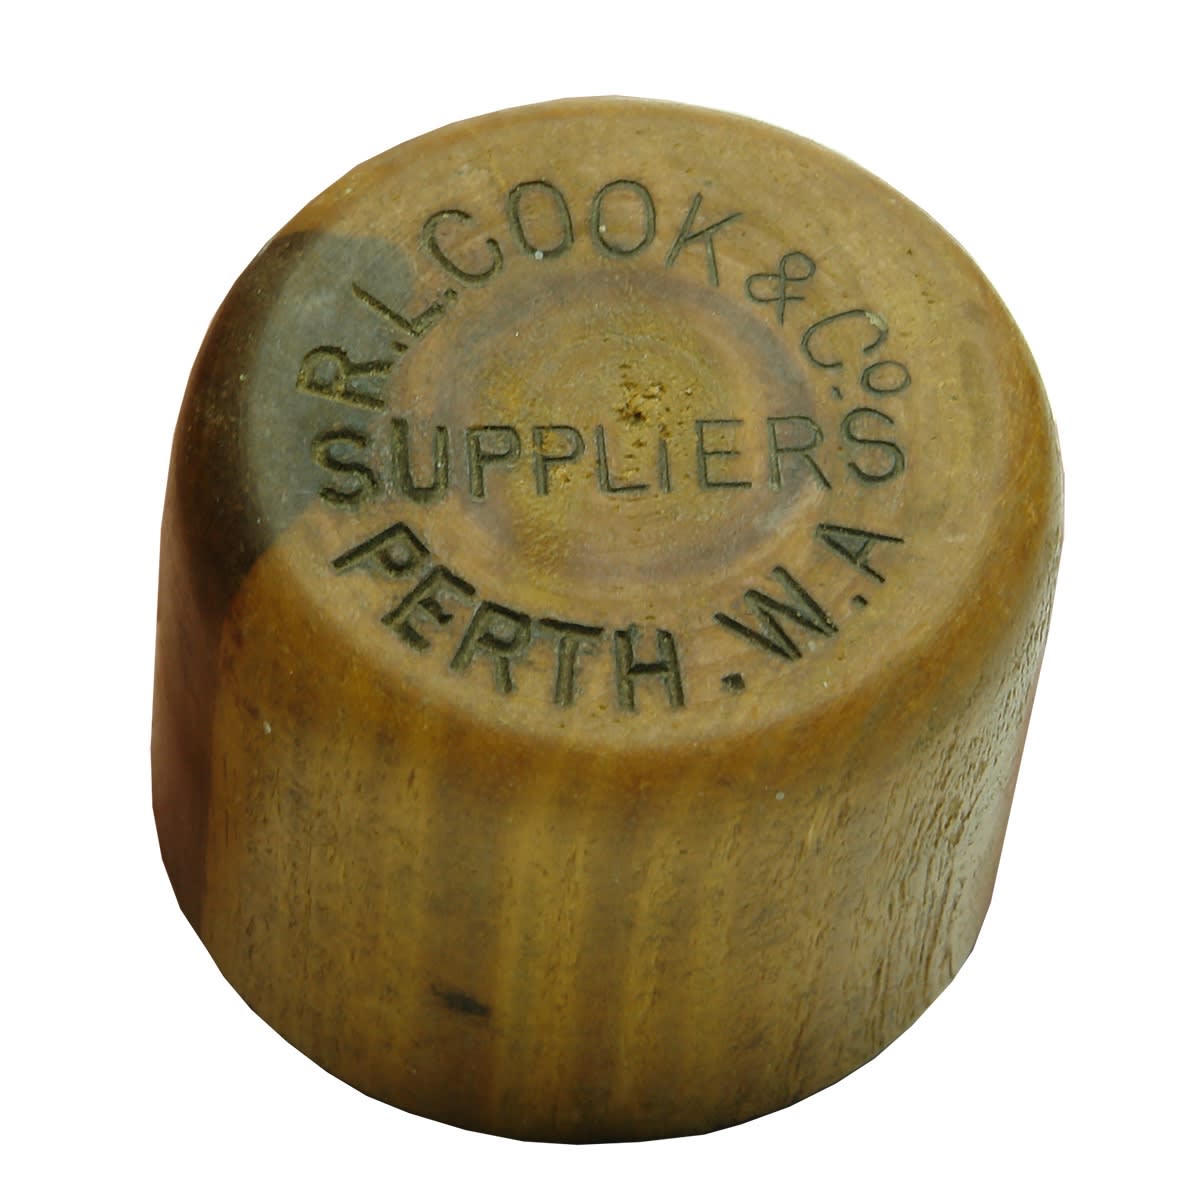 Wooden Codd Opener. R. L. Cook & Co., Suppliers, Perth, W. A. (Western Australia)